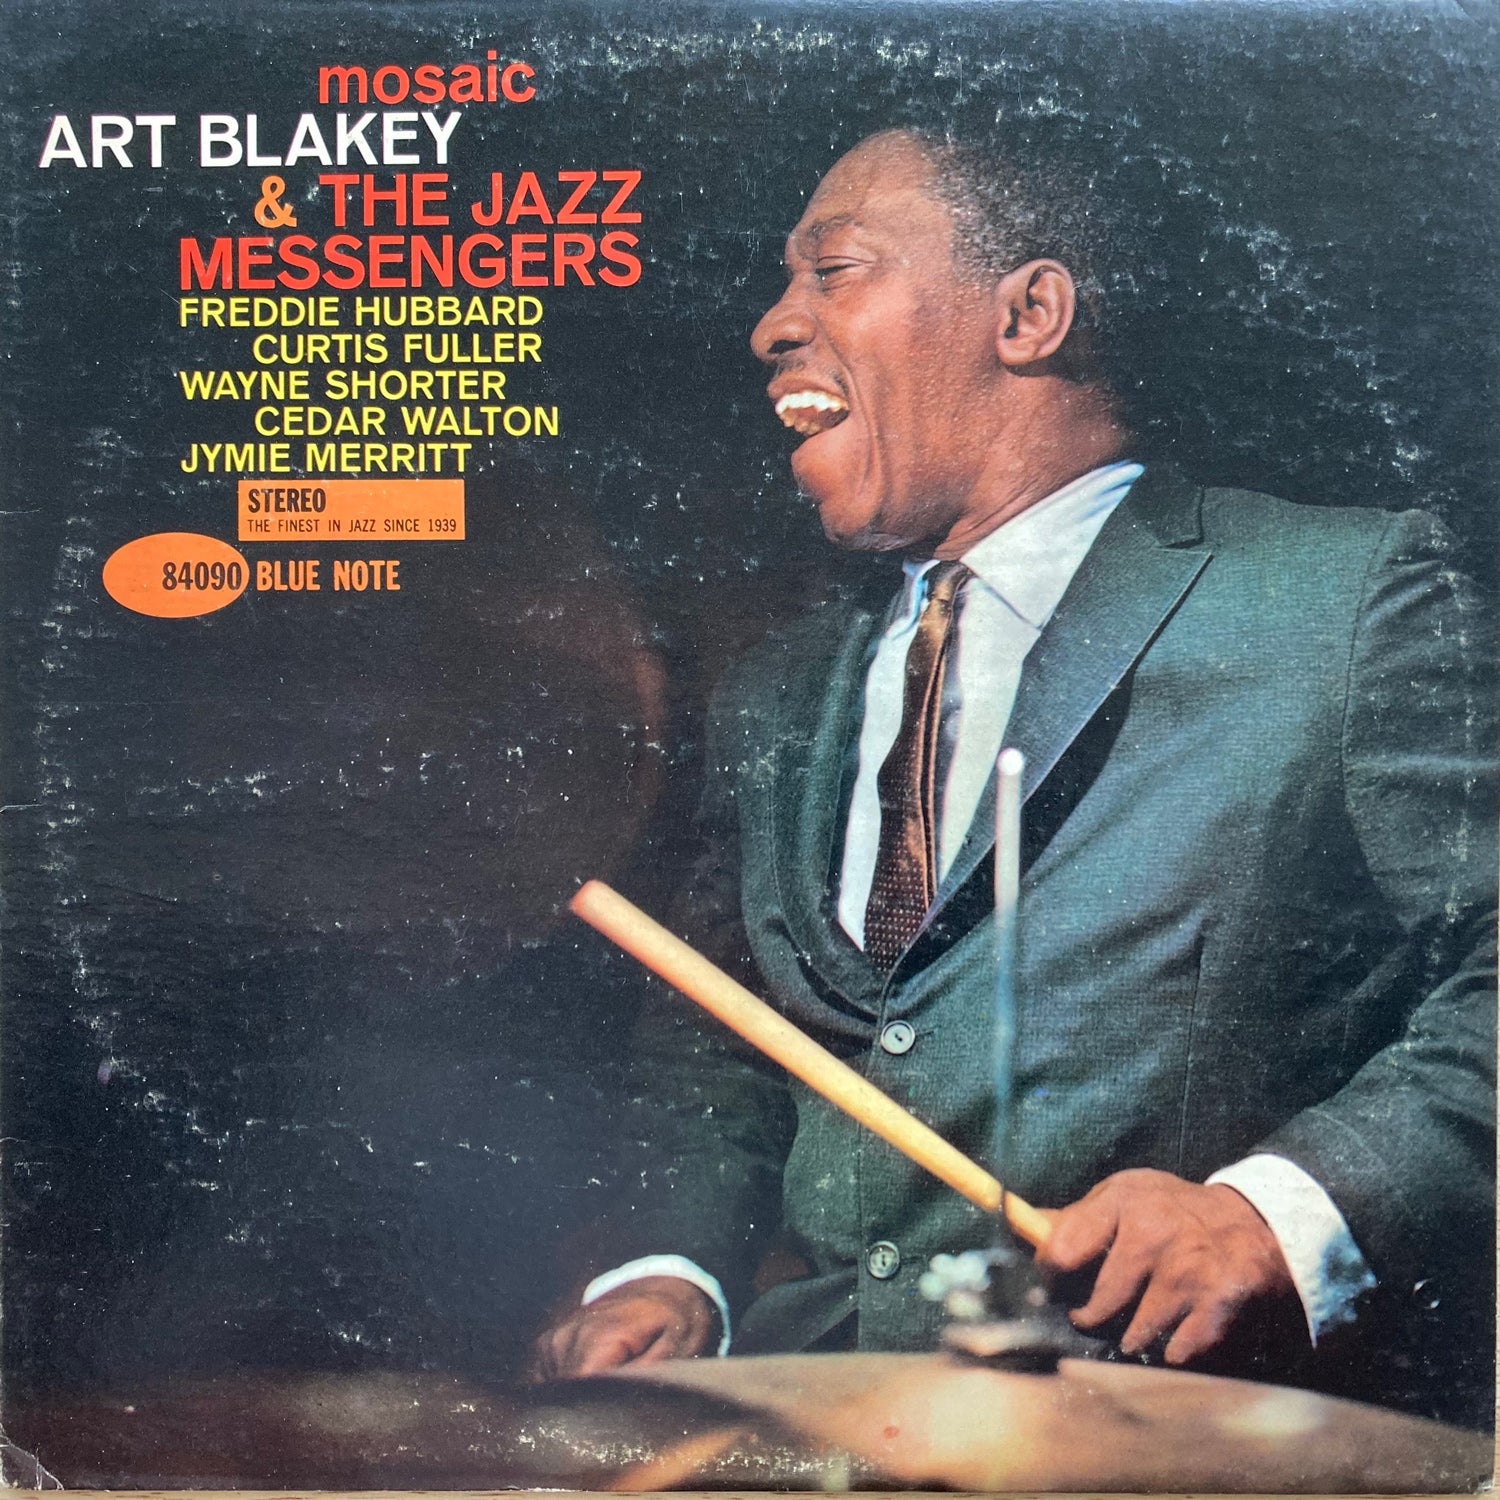 Art Blakey & The Jazz Messengers ‎- Mosaic